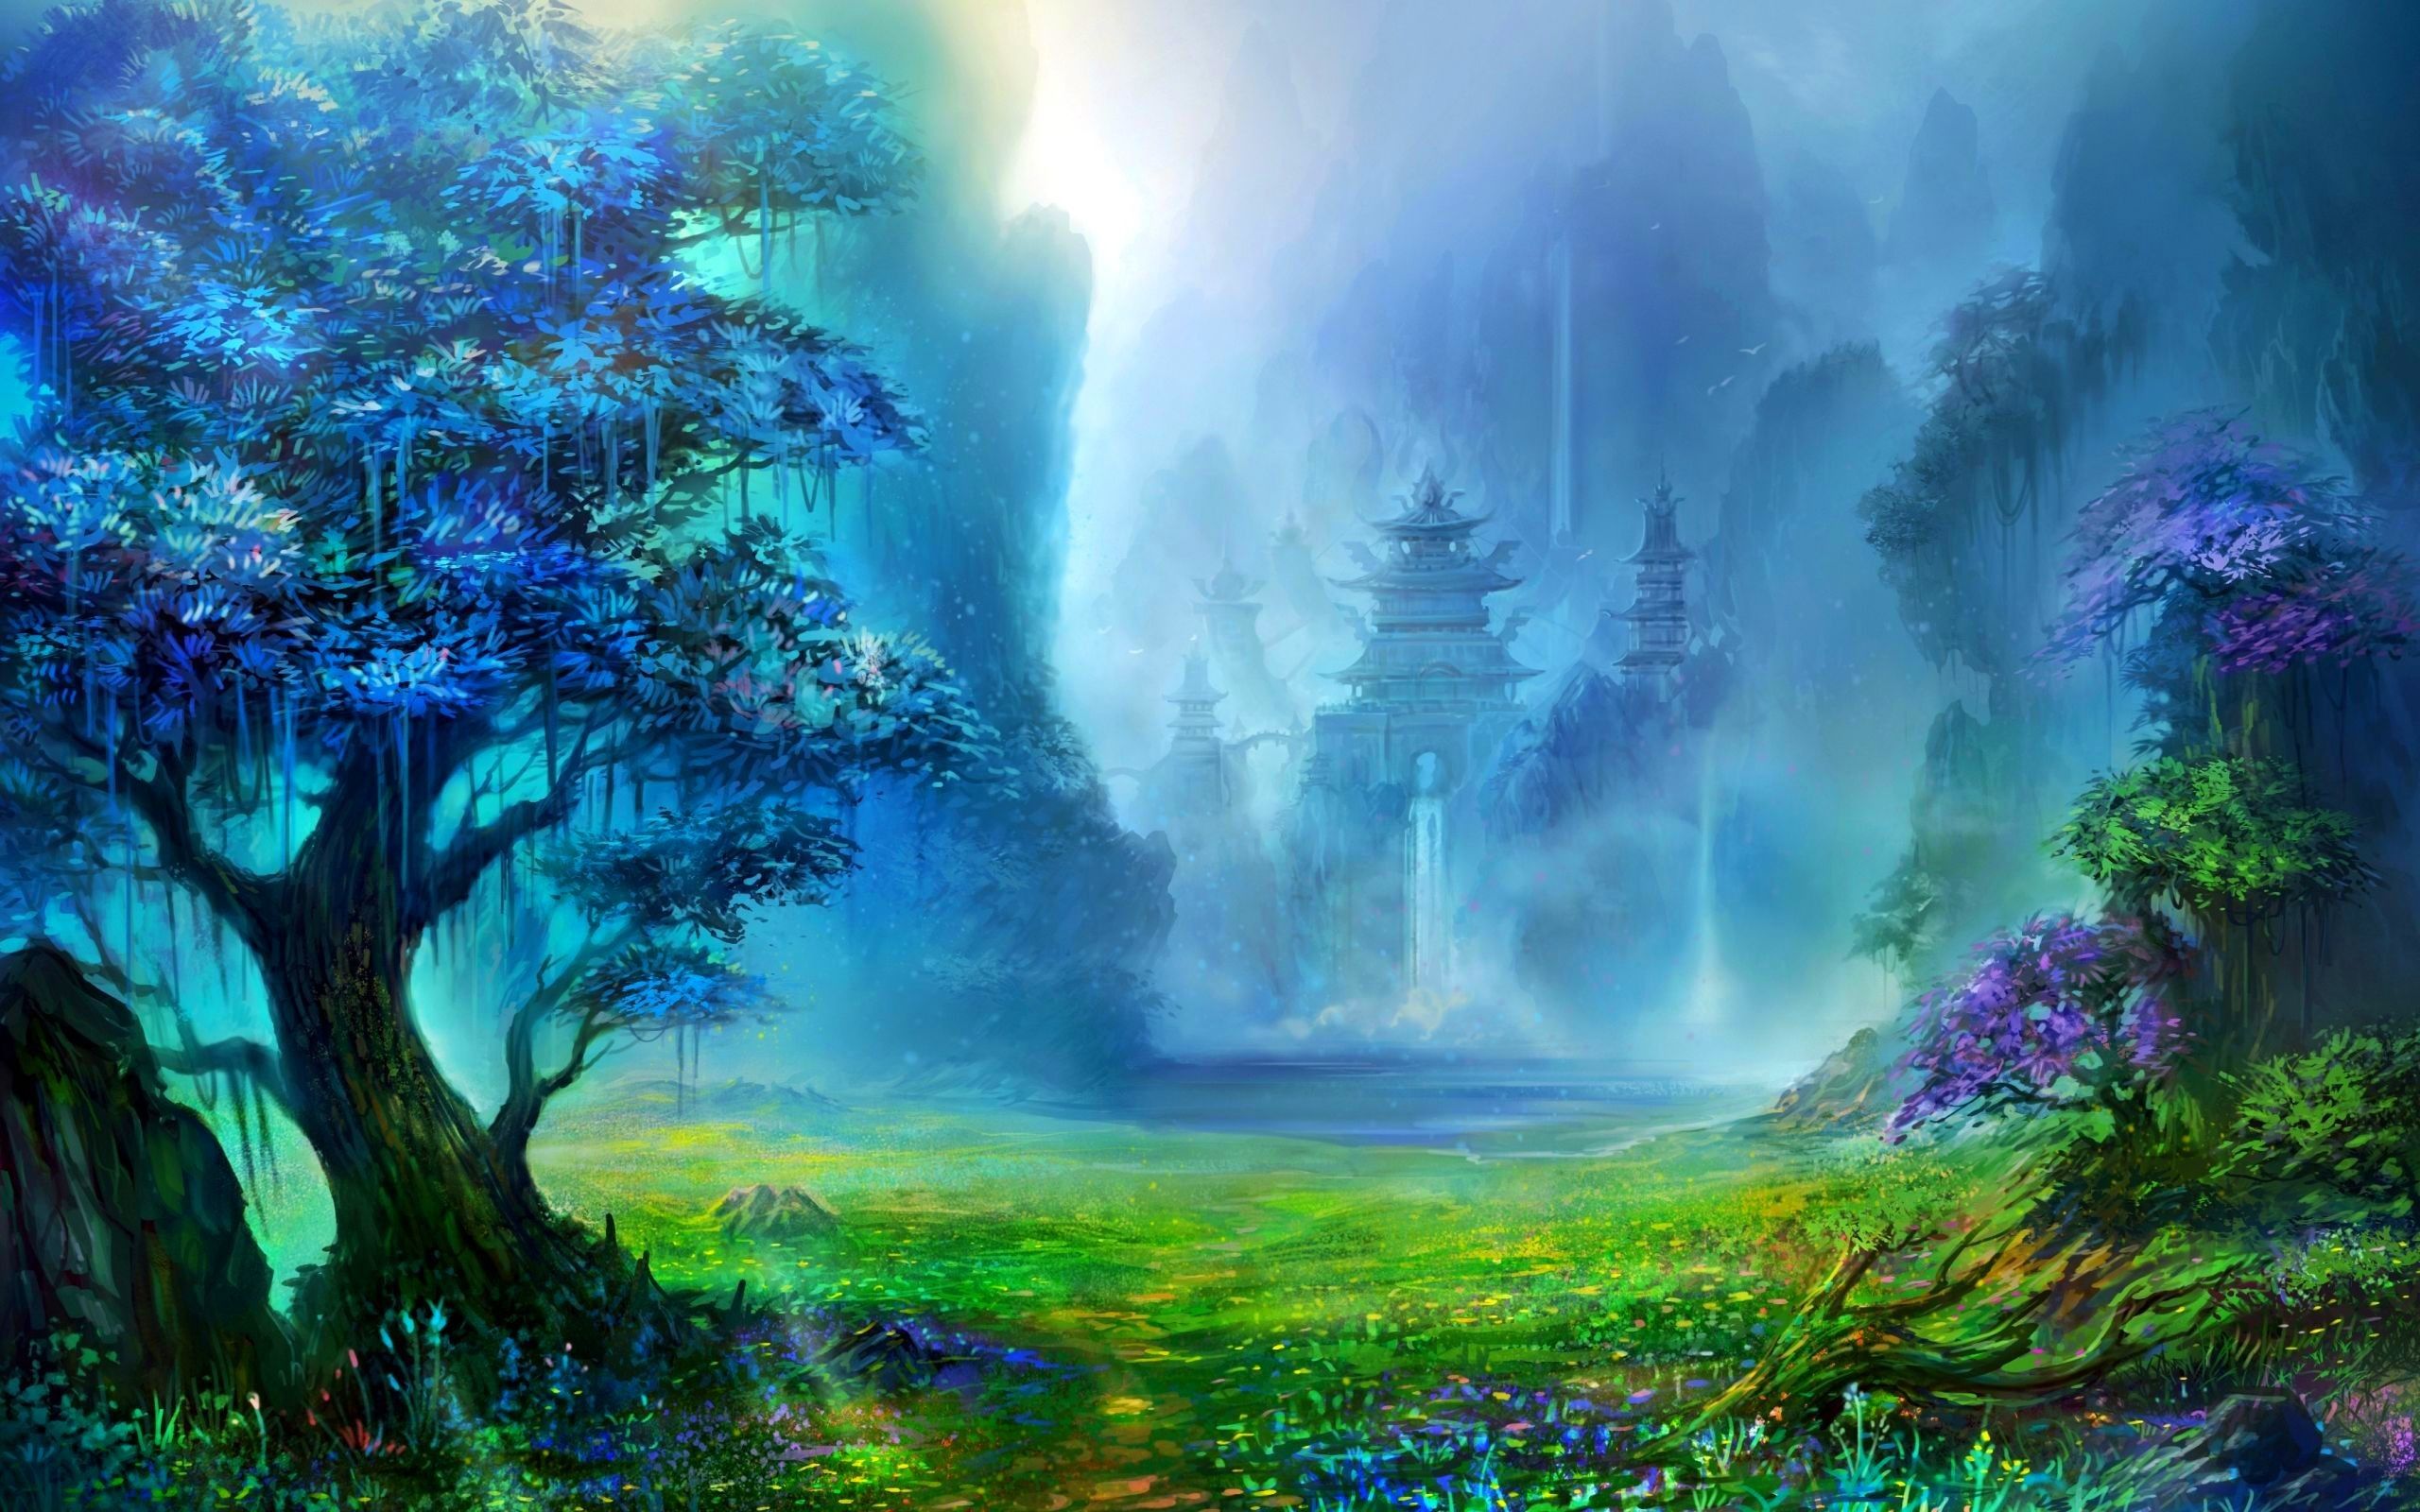 fantasy art, pagoda, Asian architecture, trees, waterfall, artwork